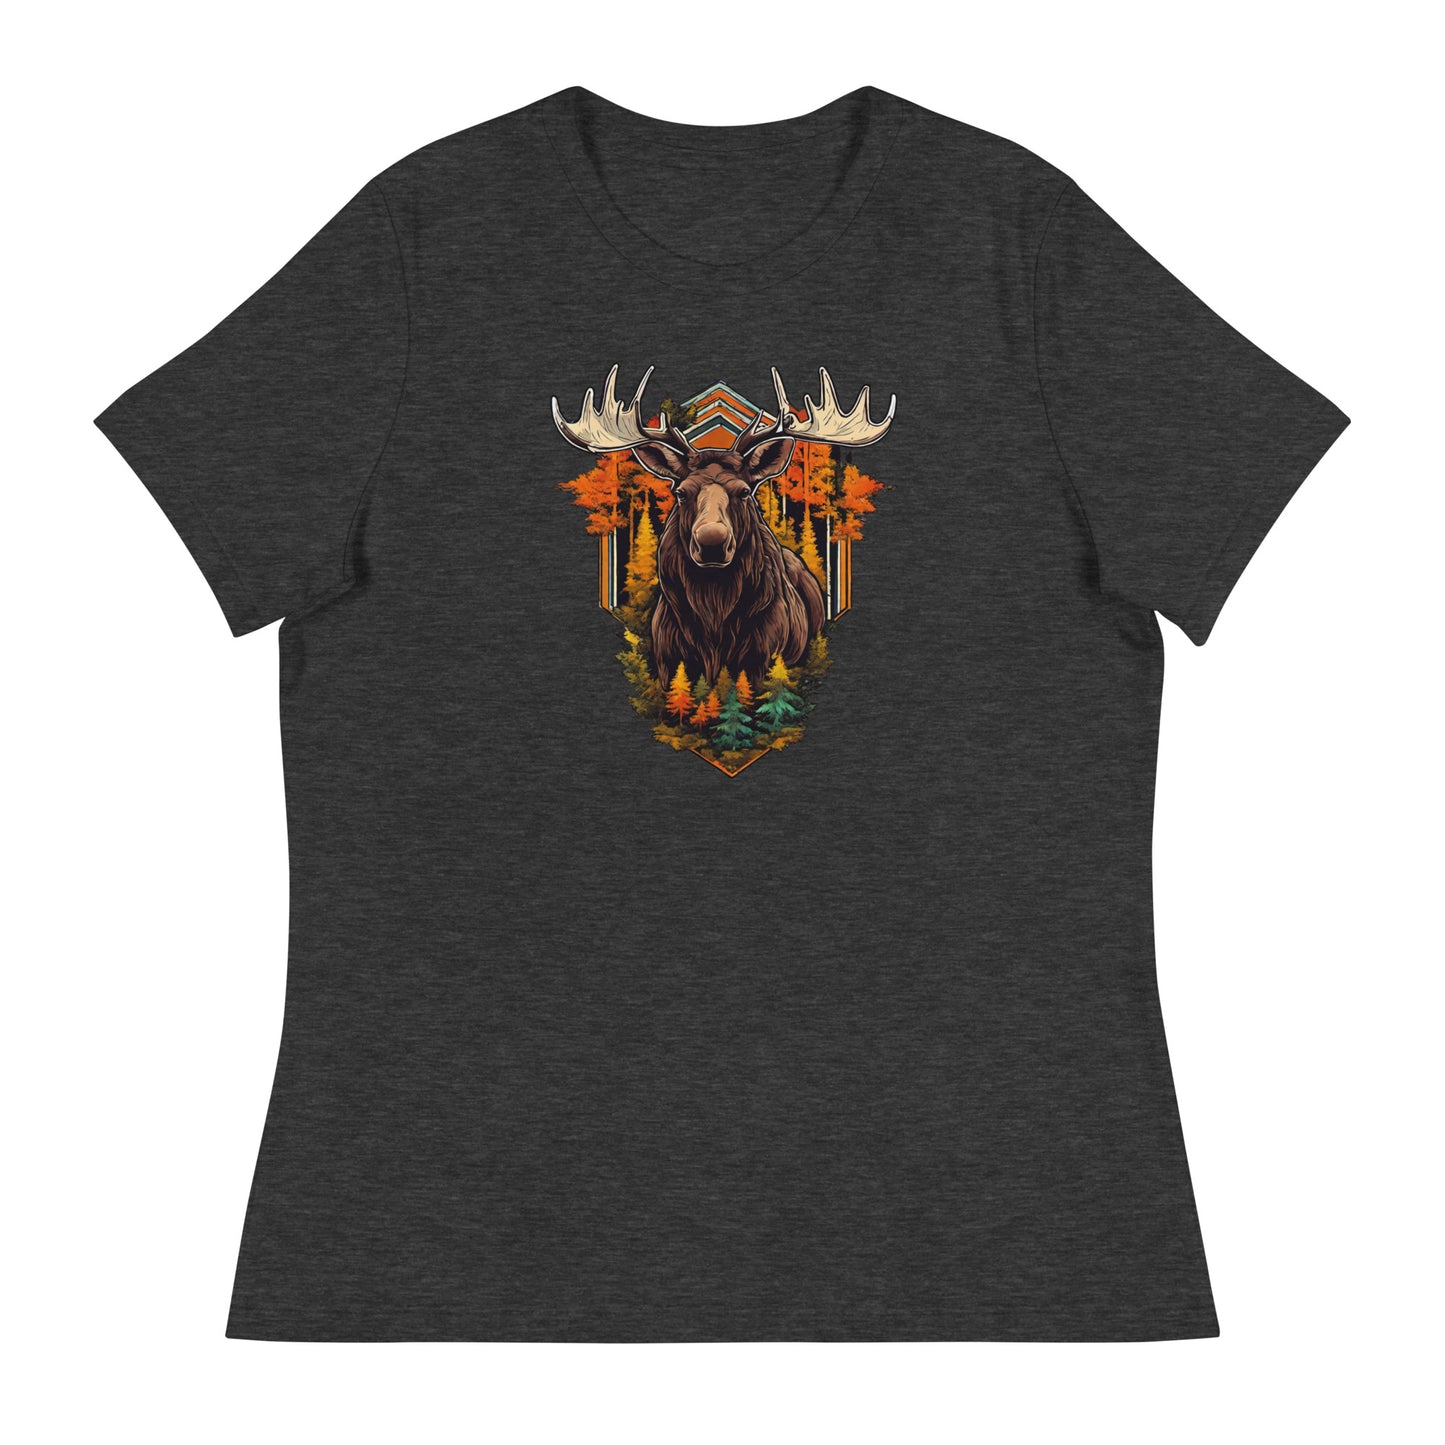 Moose & Forest Emblem Women's T-Shirt Dark Grey Heather